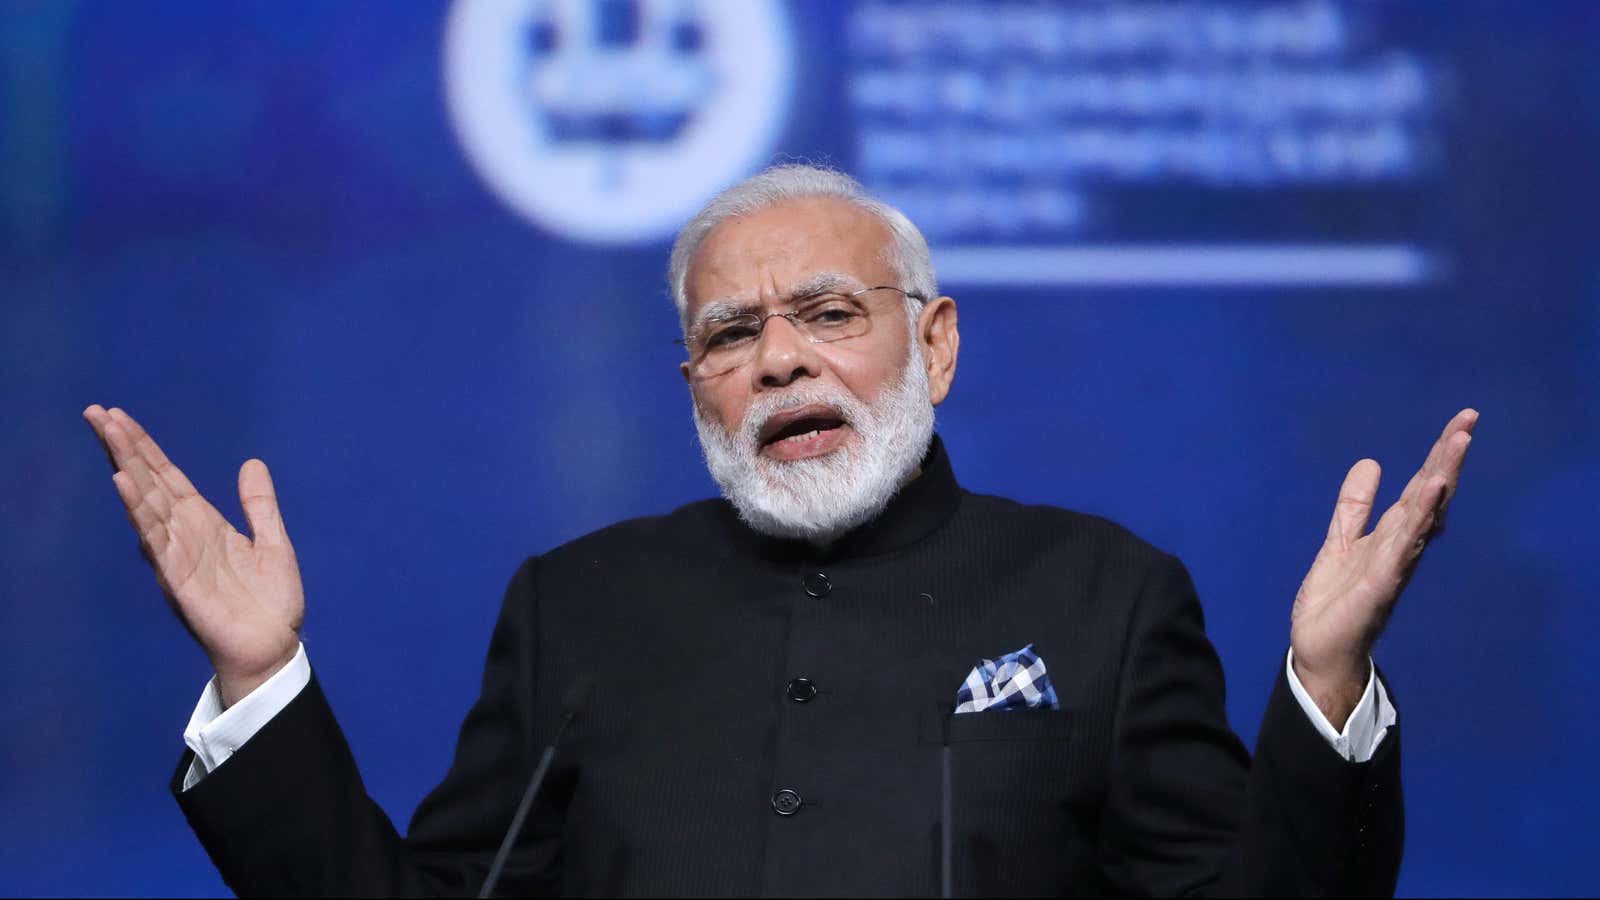 Narendra Modi attends a session of the St. Petersburg International Economic Forum